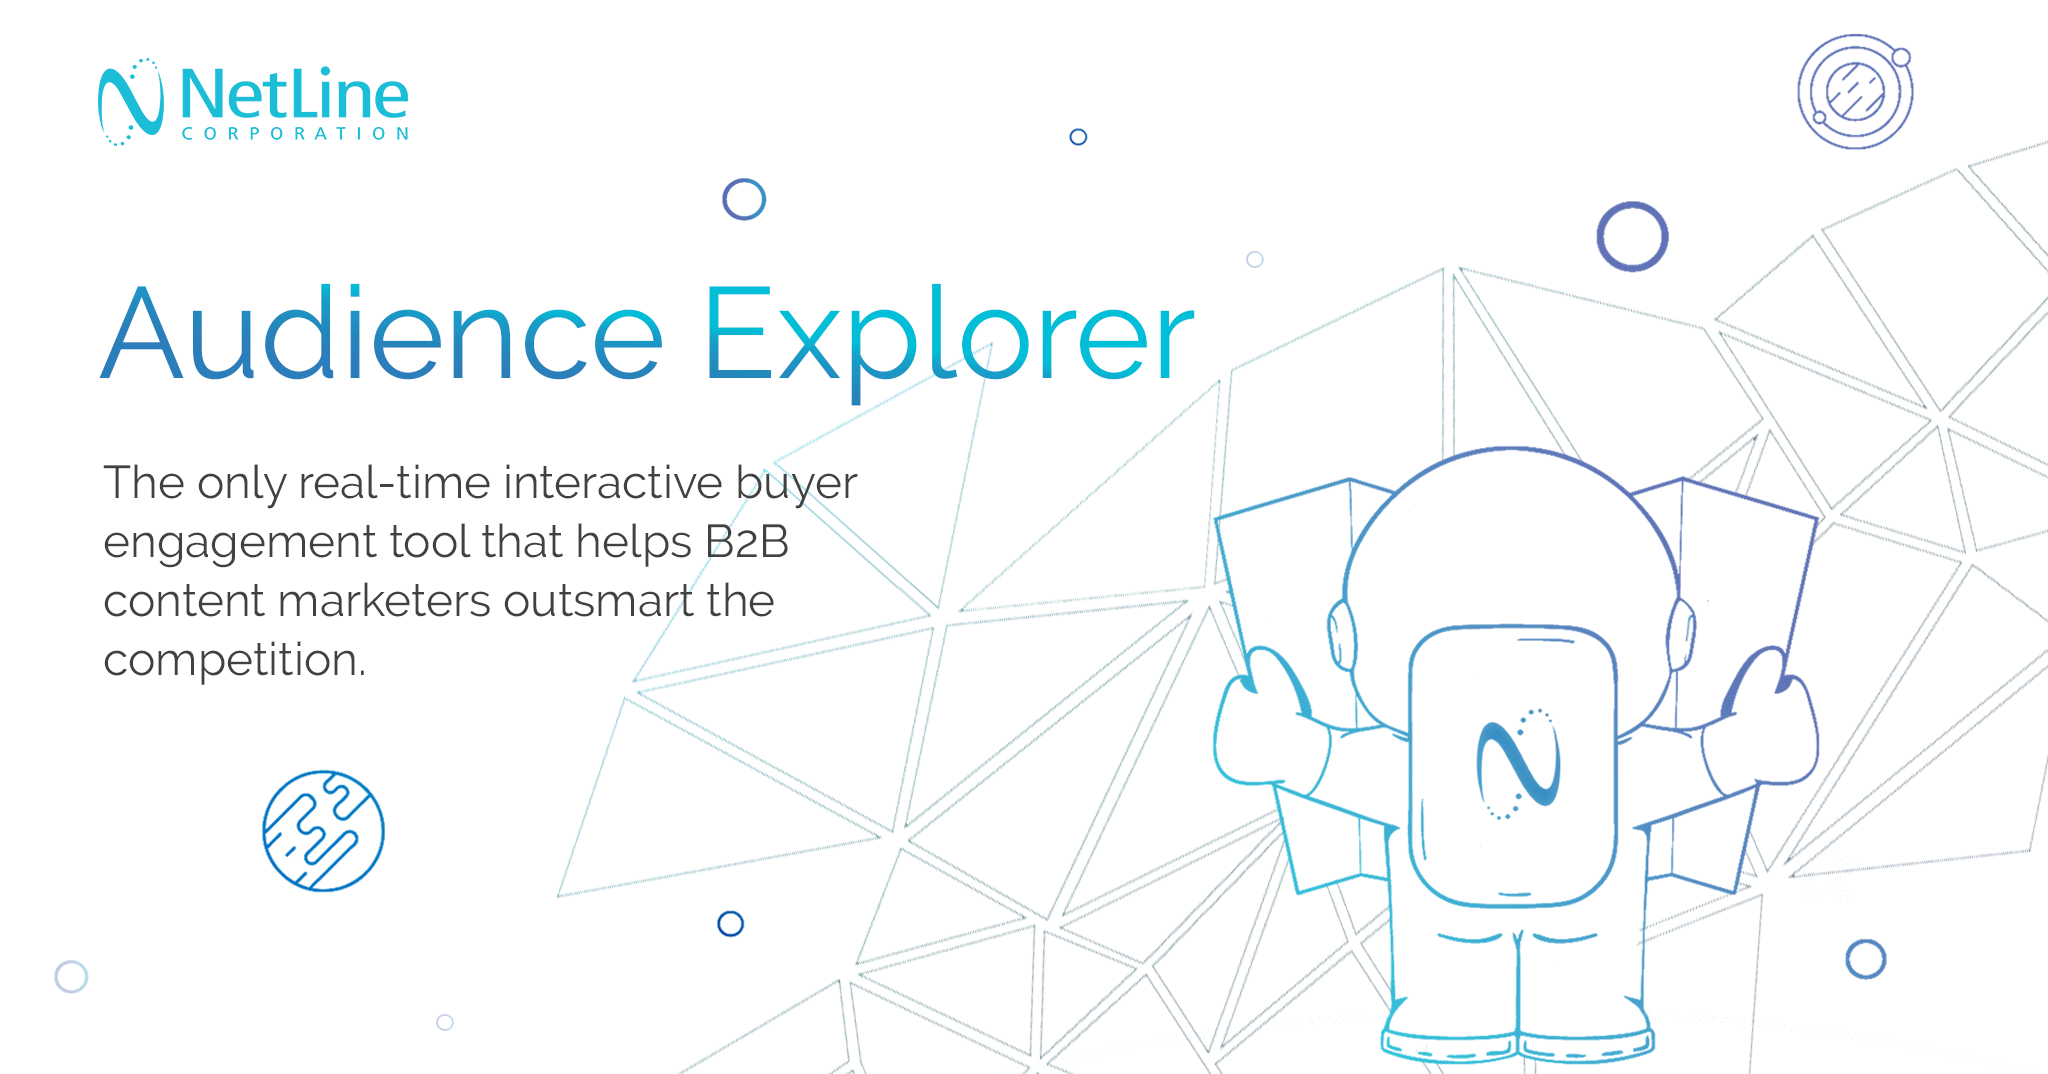 NetLine: Audience Explorer